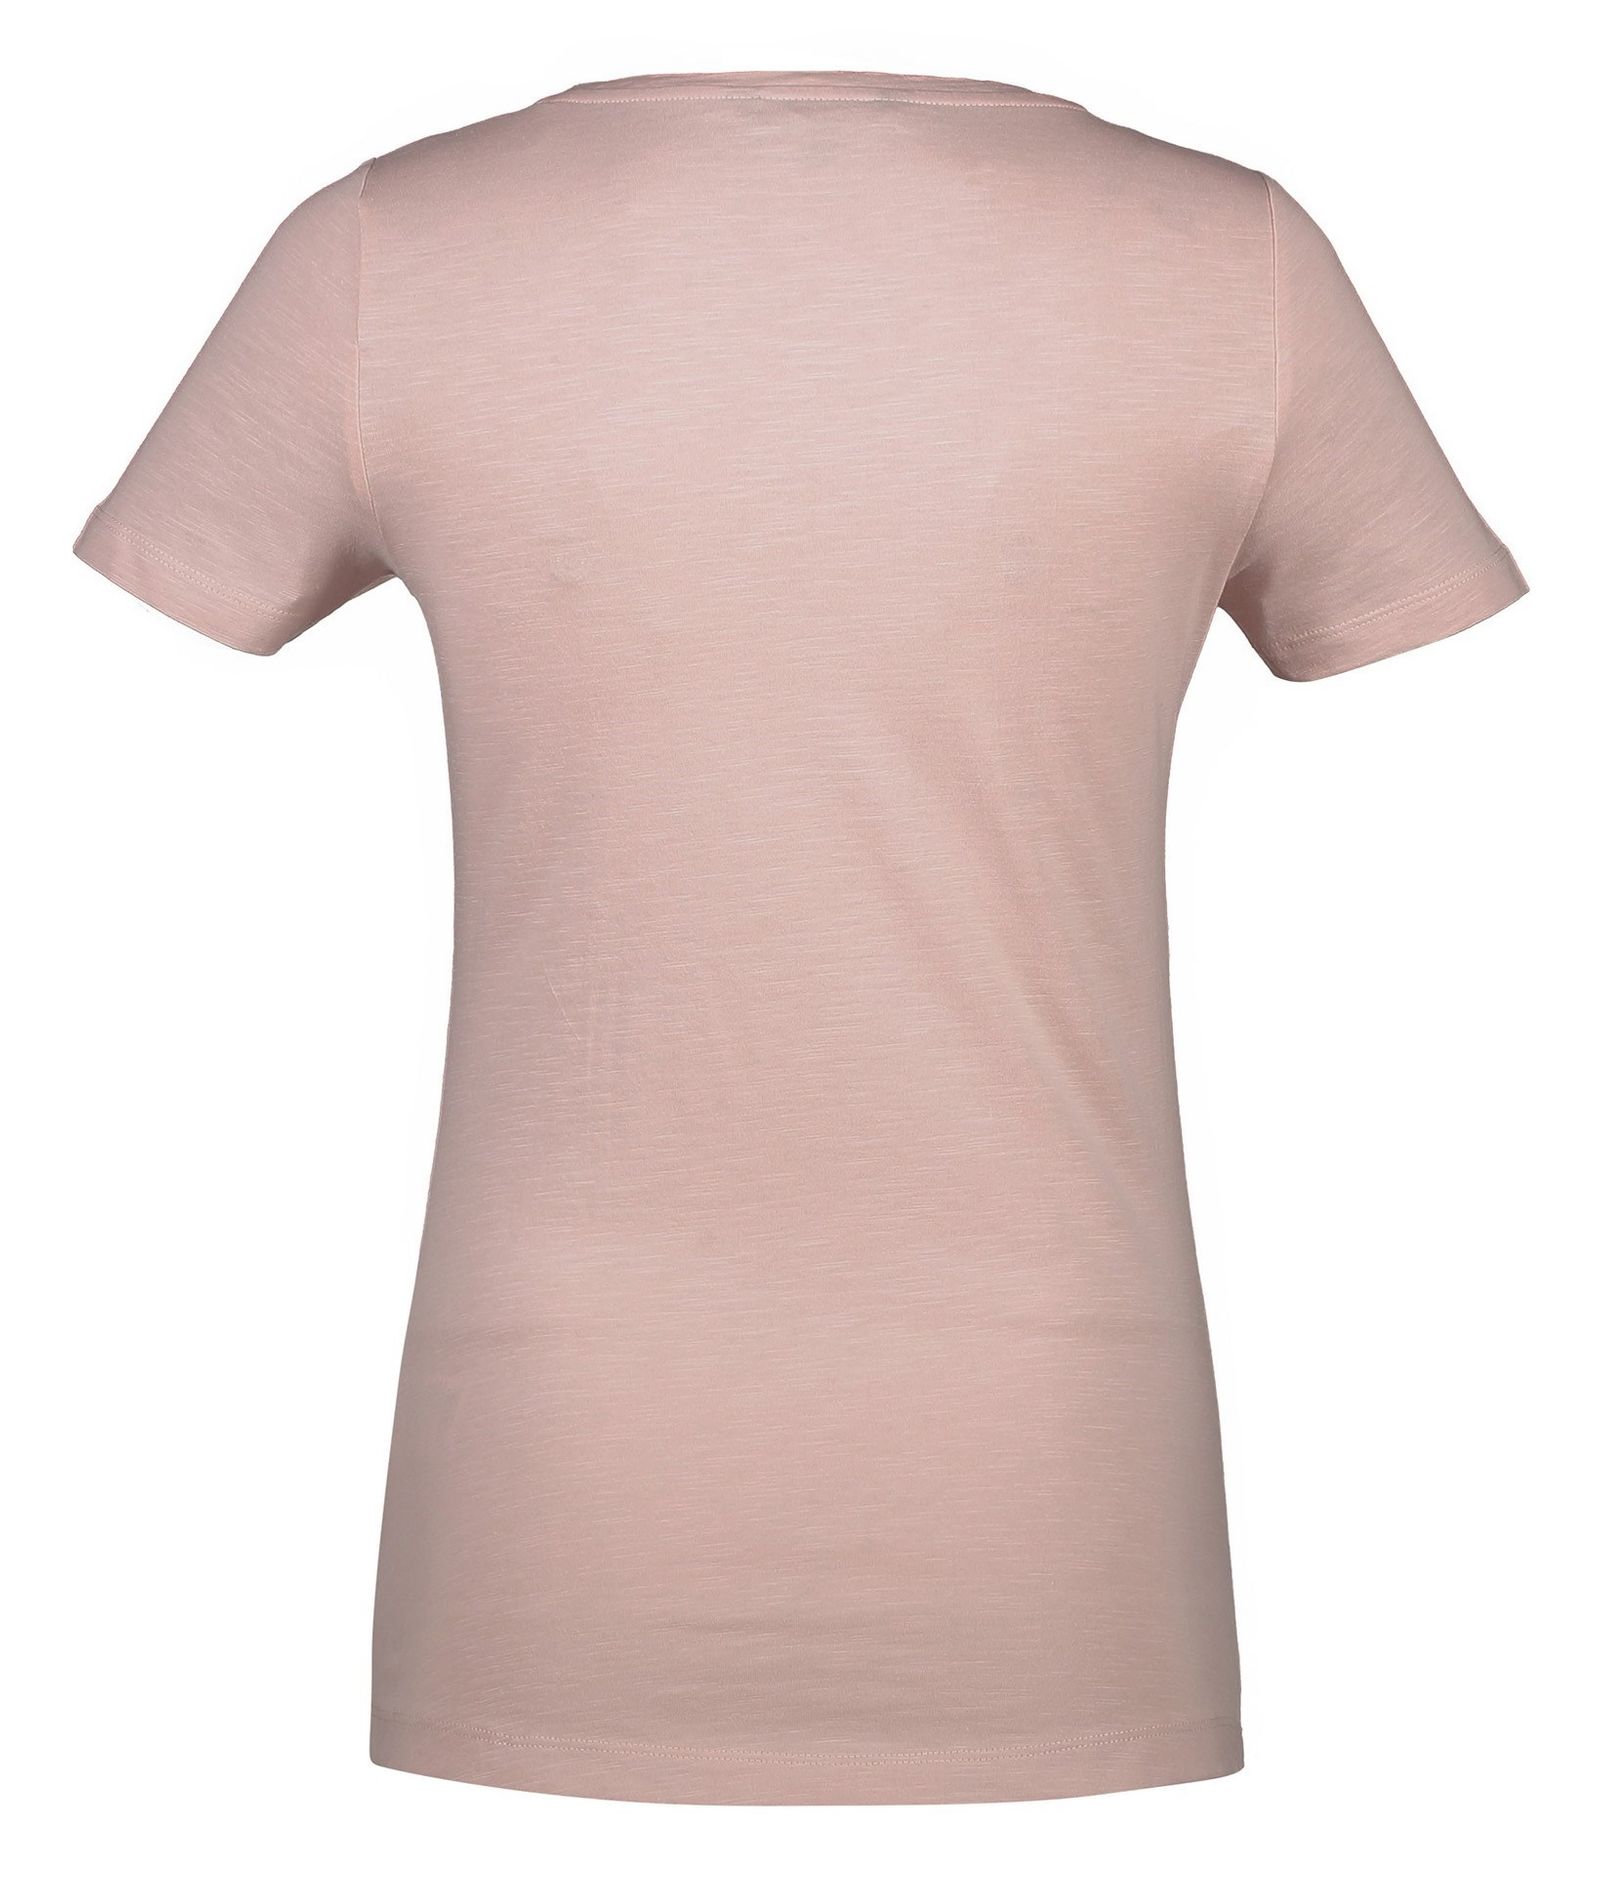 تی شرت نخی یقه گرد زنانه - کالکشن - صورتي روشن - 5